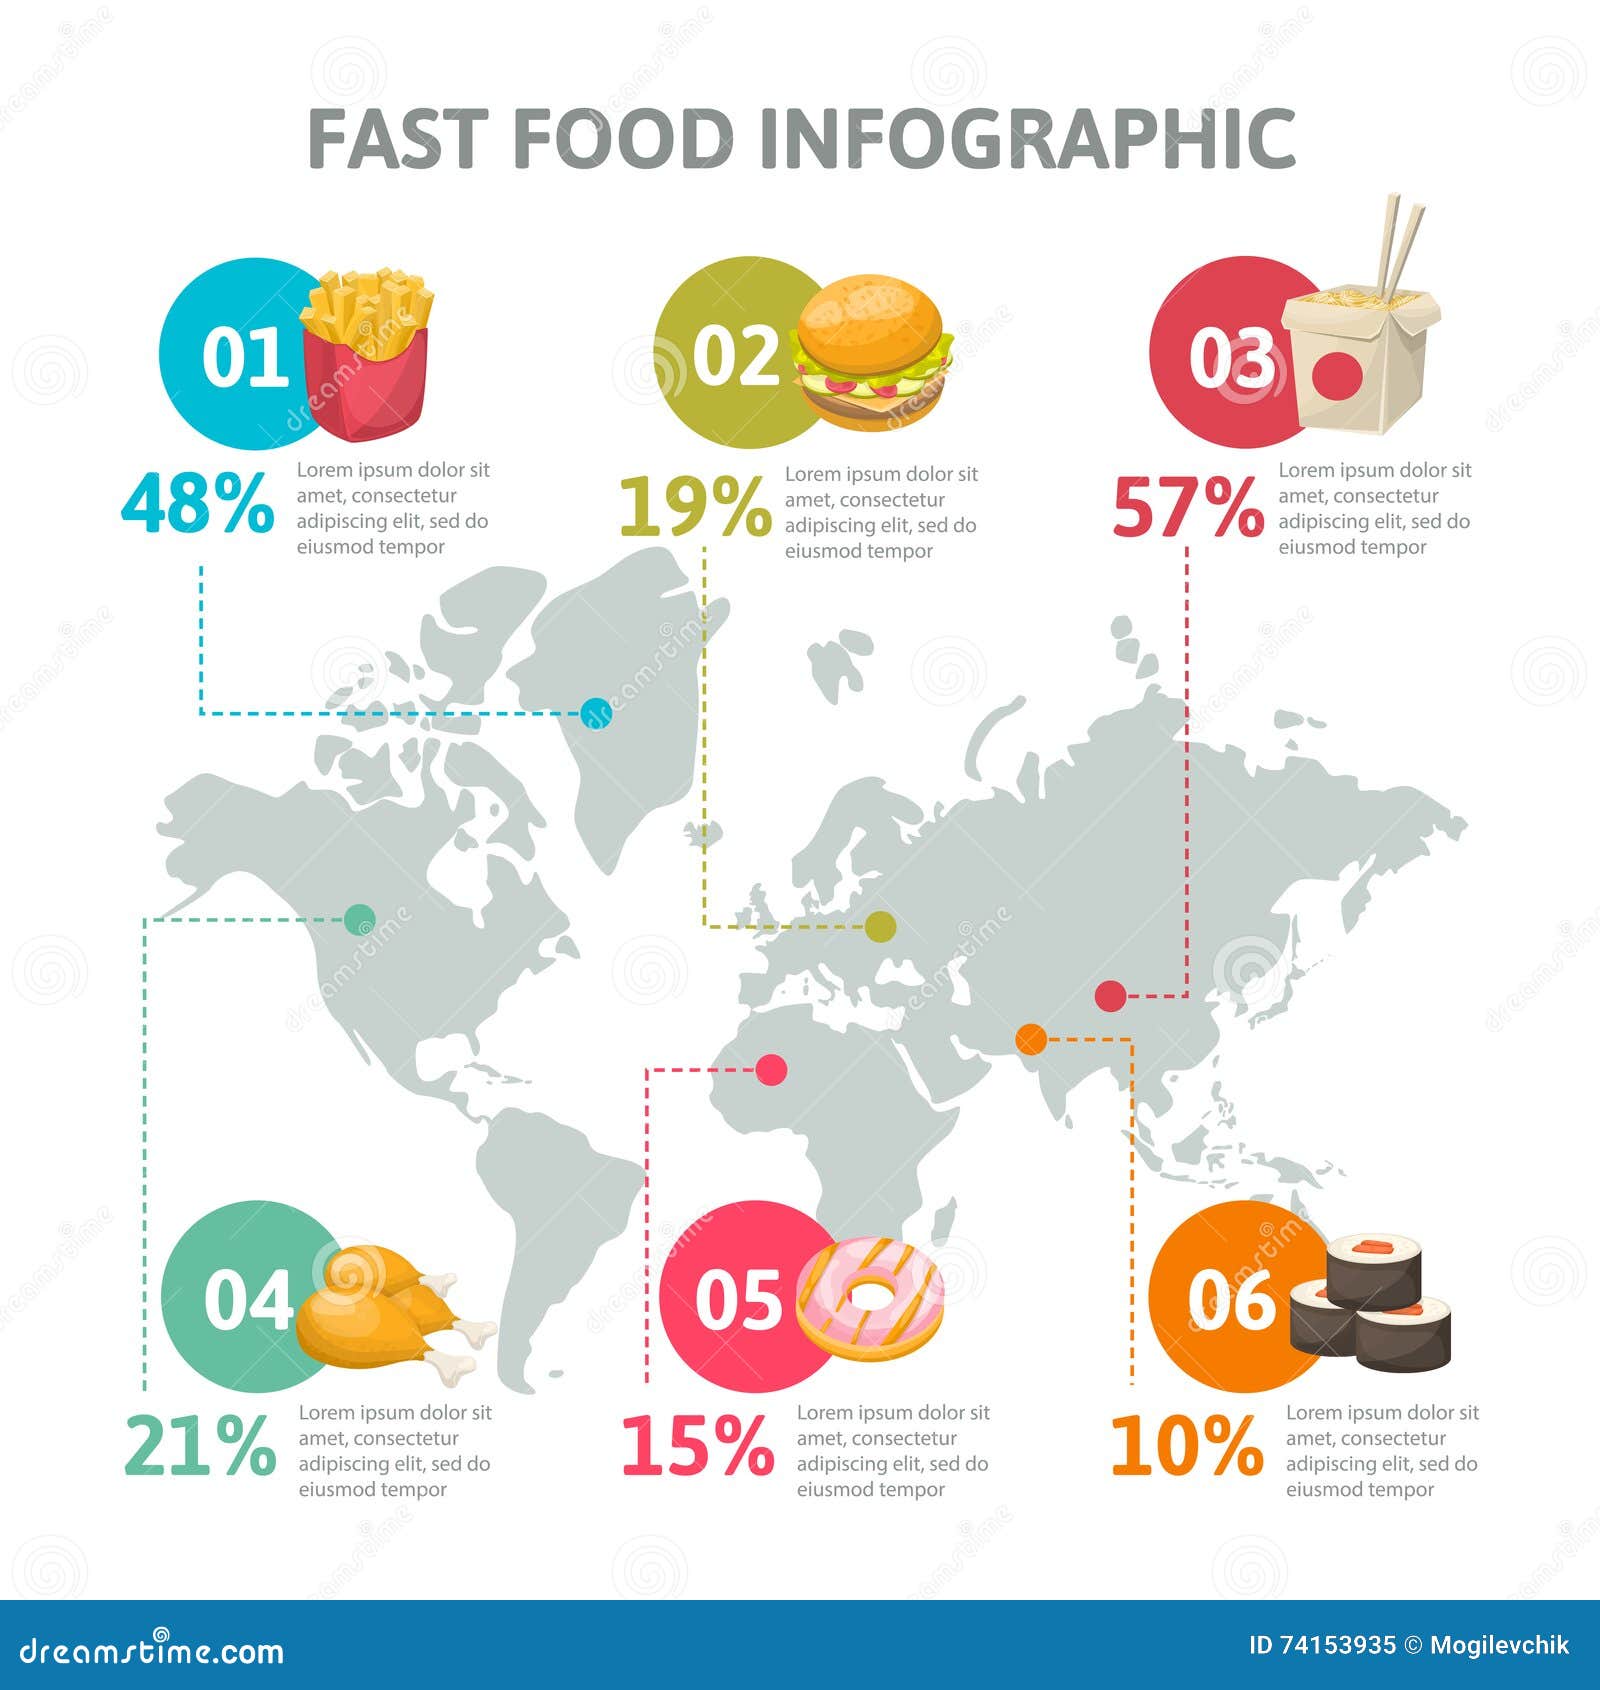 Фаст стране. Fast food infographic. Инфографика fast food. Распространение фаст фуда. Инфографика для фаст фуда.